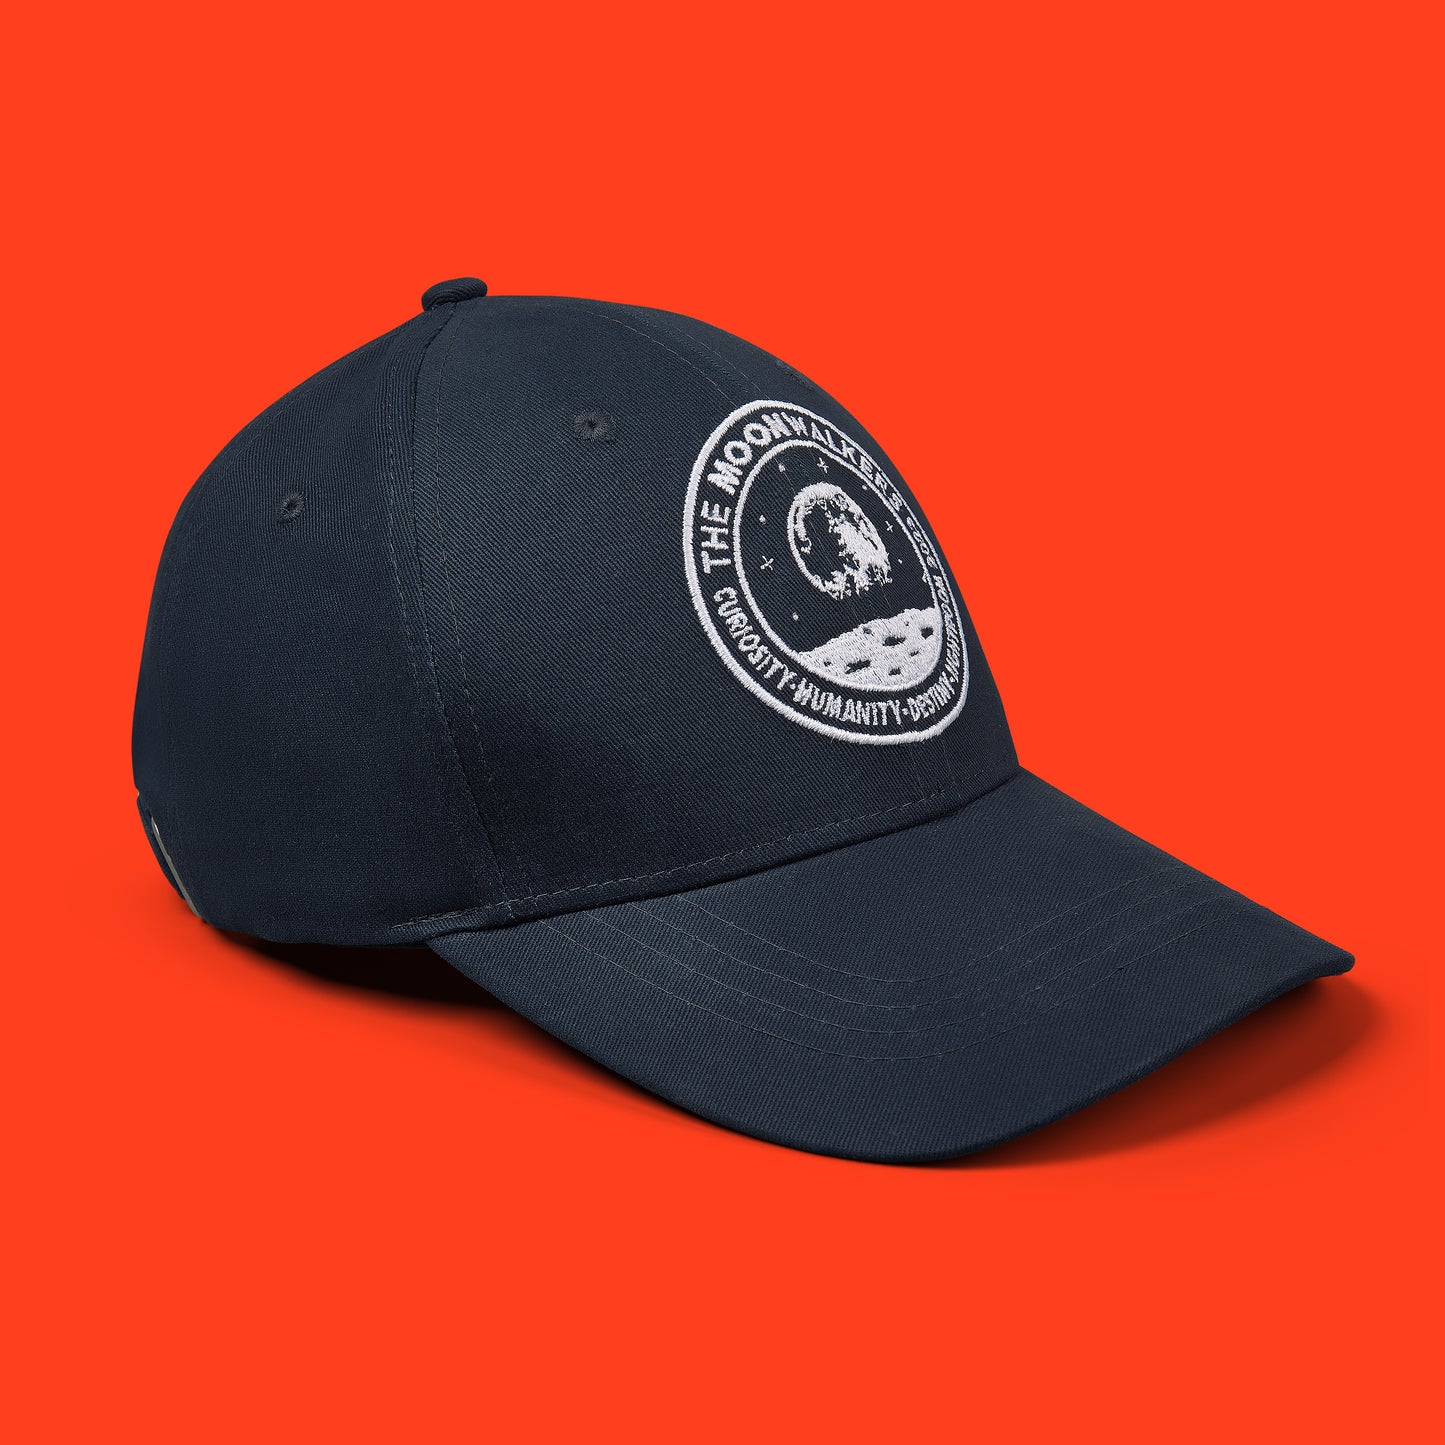 The Moonwalkers cap